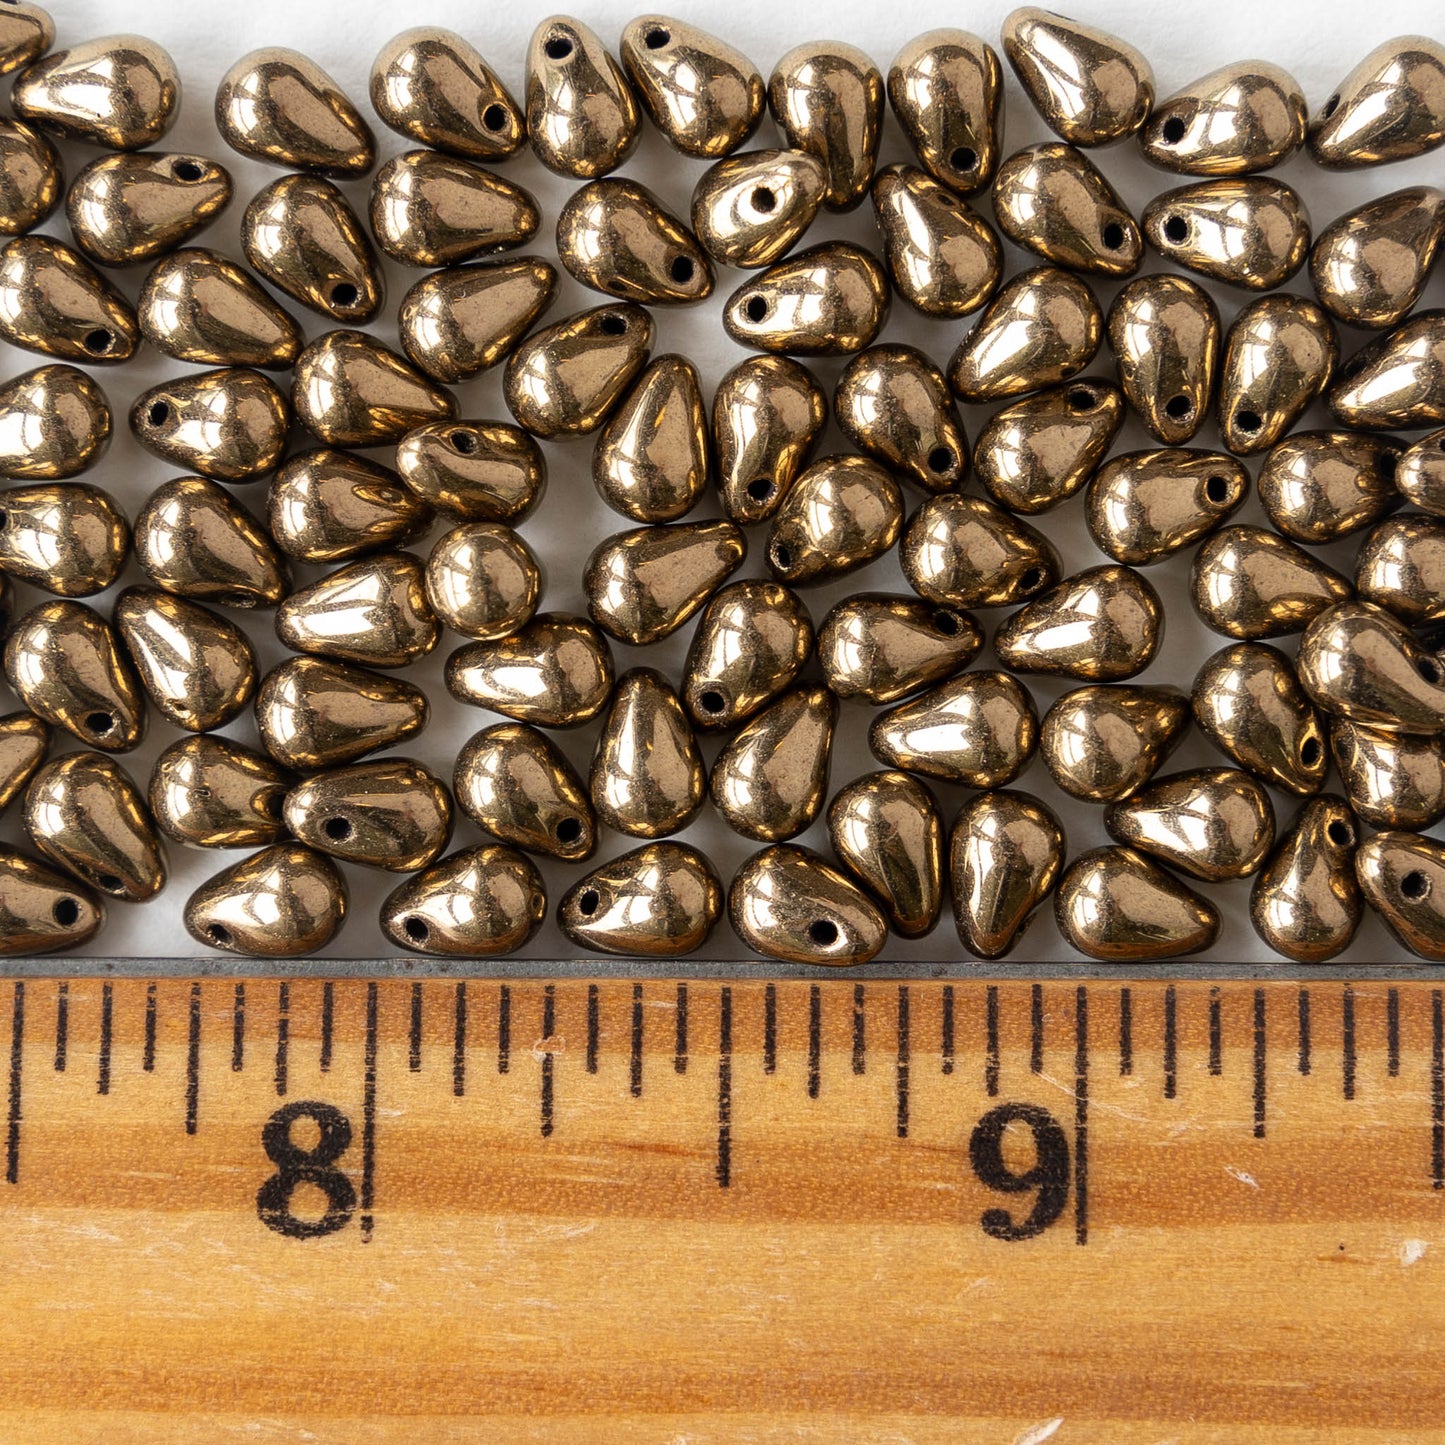 4x6mm Glass Teardrop Beads - Metallic Gold Bronze Luster - 100 Beads